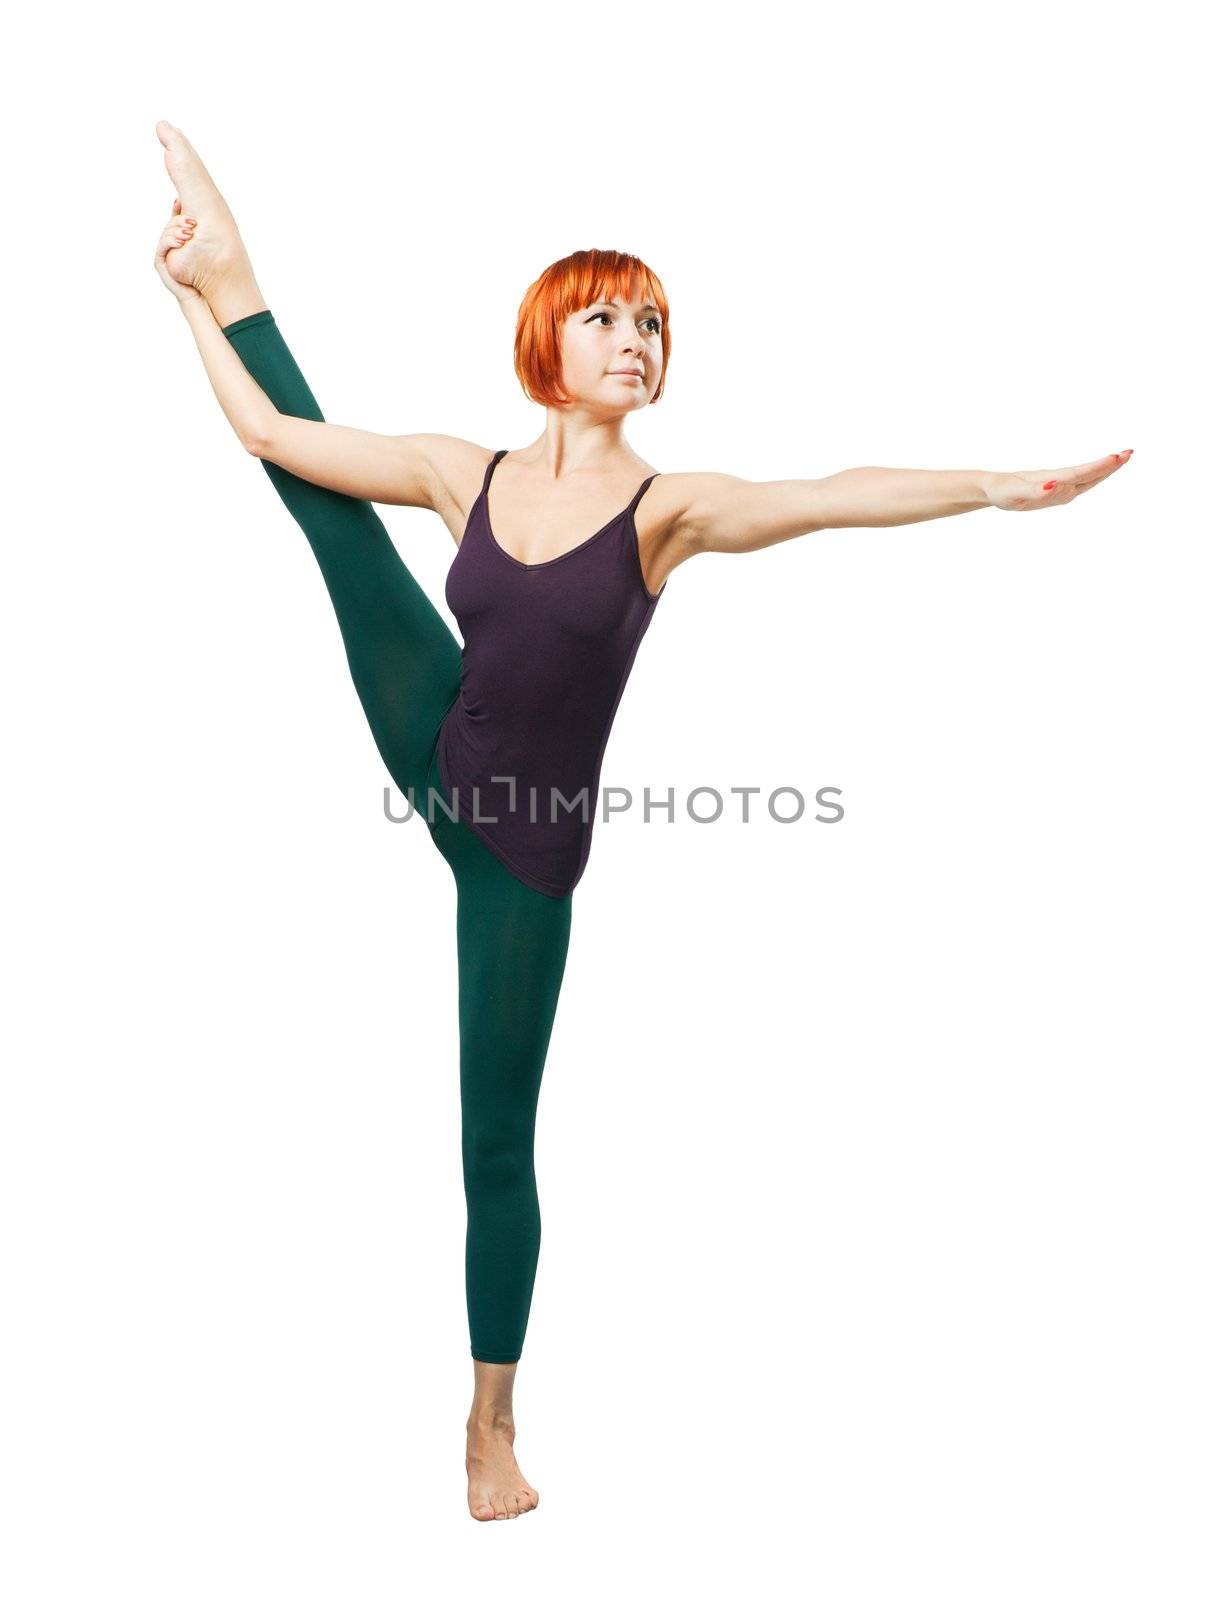 Slim beautiful woman practicing yoga asana standing on one foot